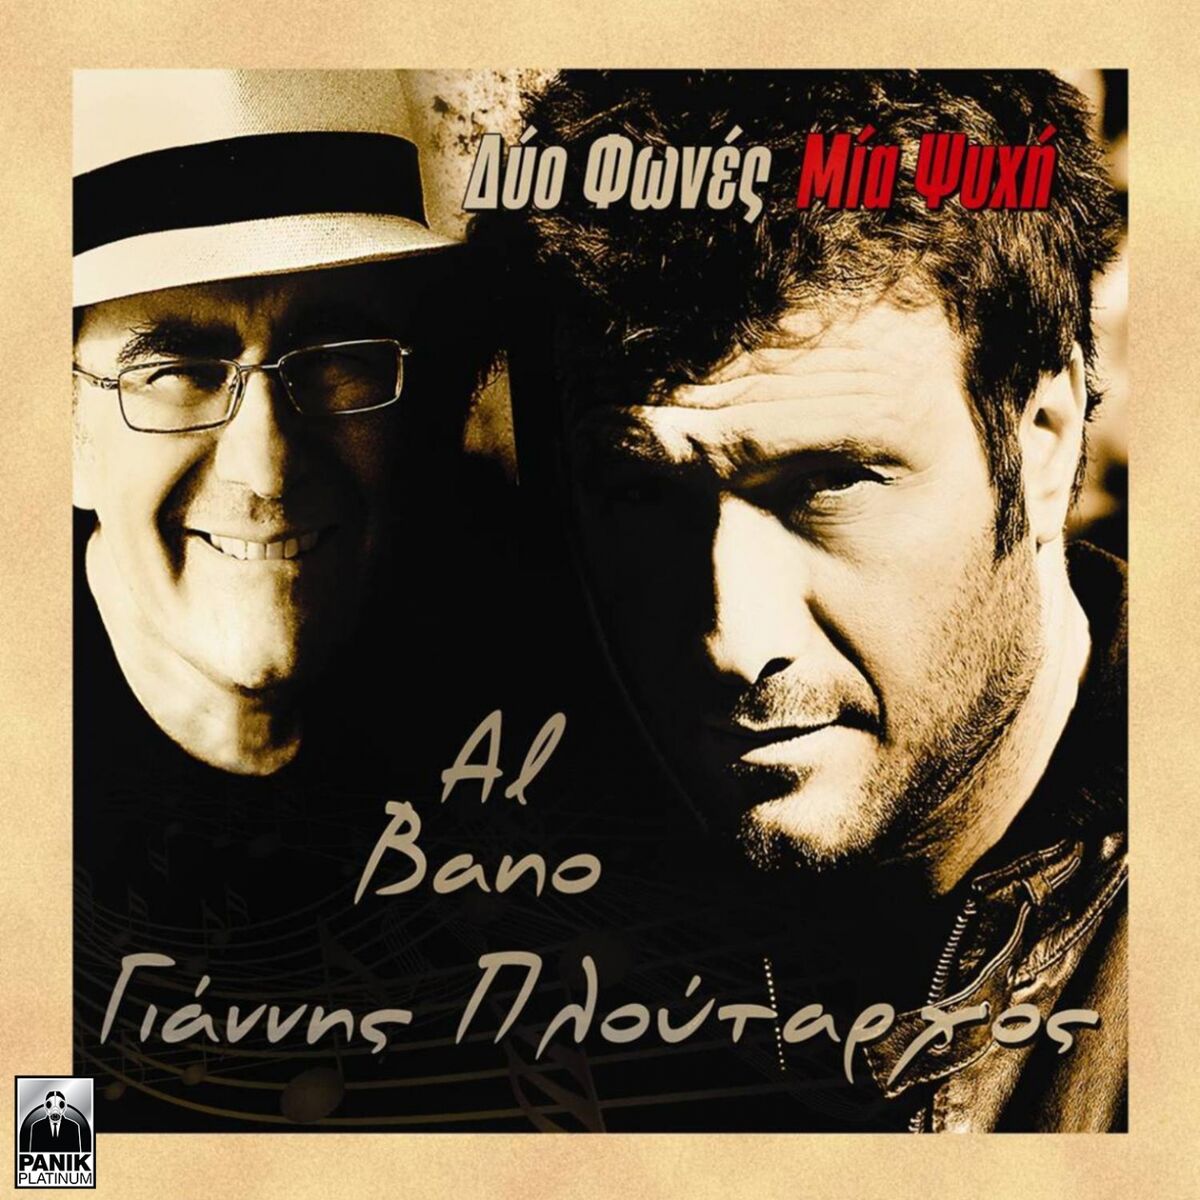 Al Bano: albums, songs, playlists | Listen on Deezer